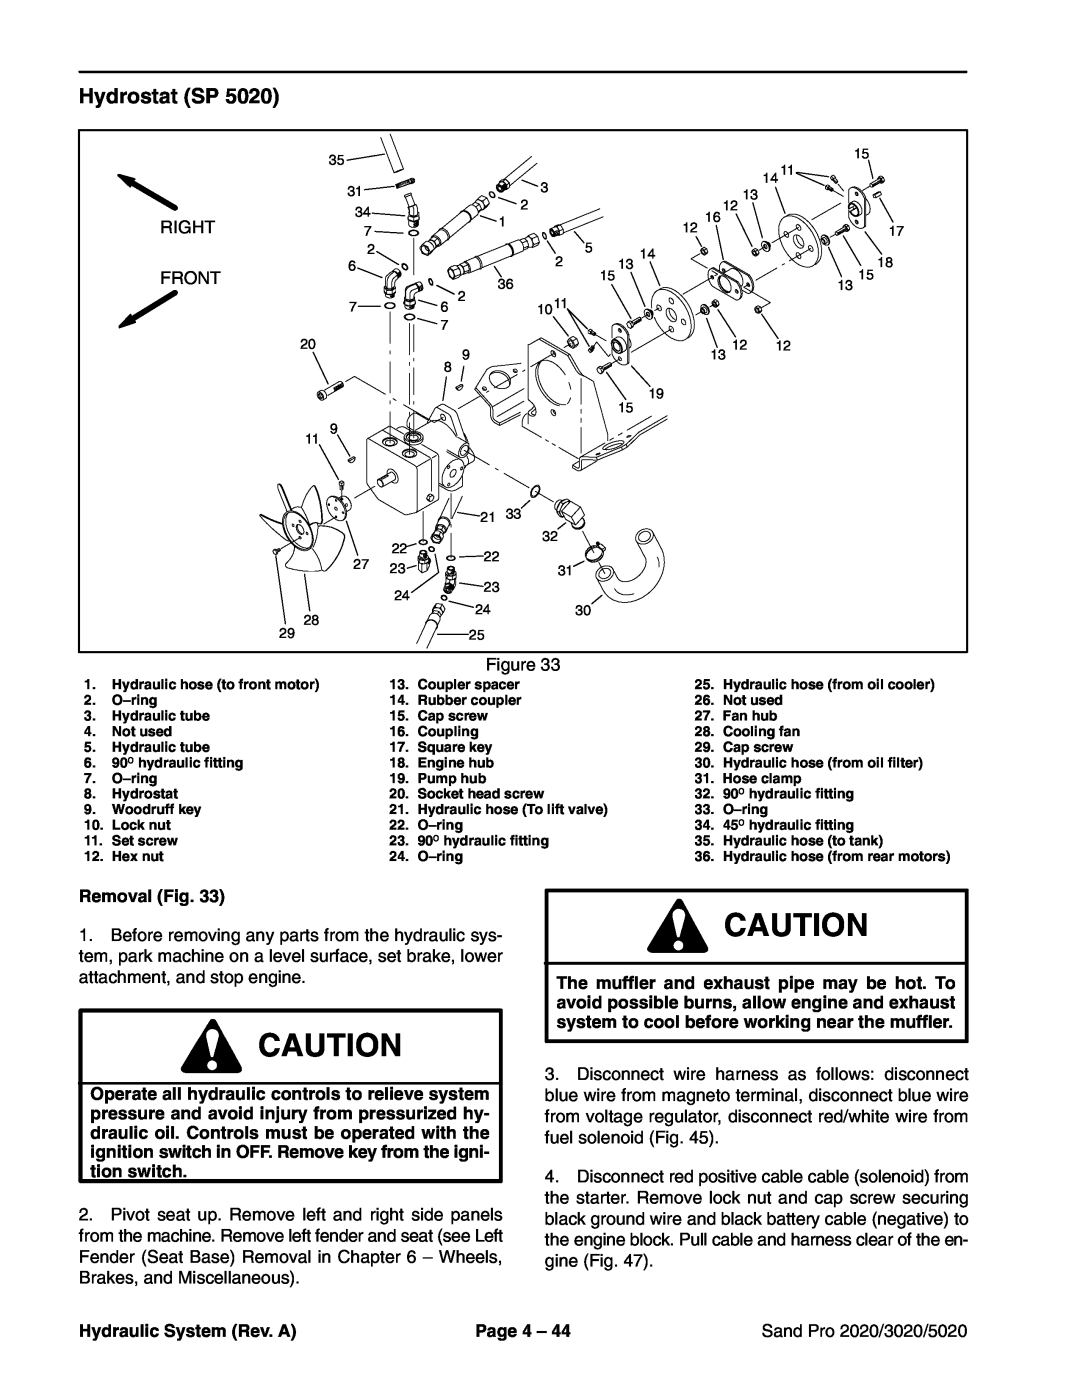 Toro service manual Hydrostat SP, Removal Fig, Hydraulic System Rev. A, Page 4, Sand Pro 2020/3020/5020 